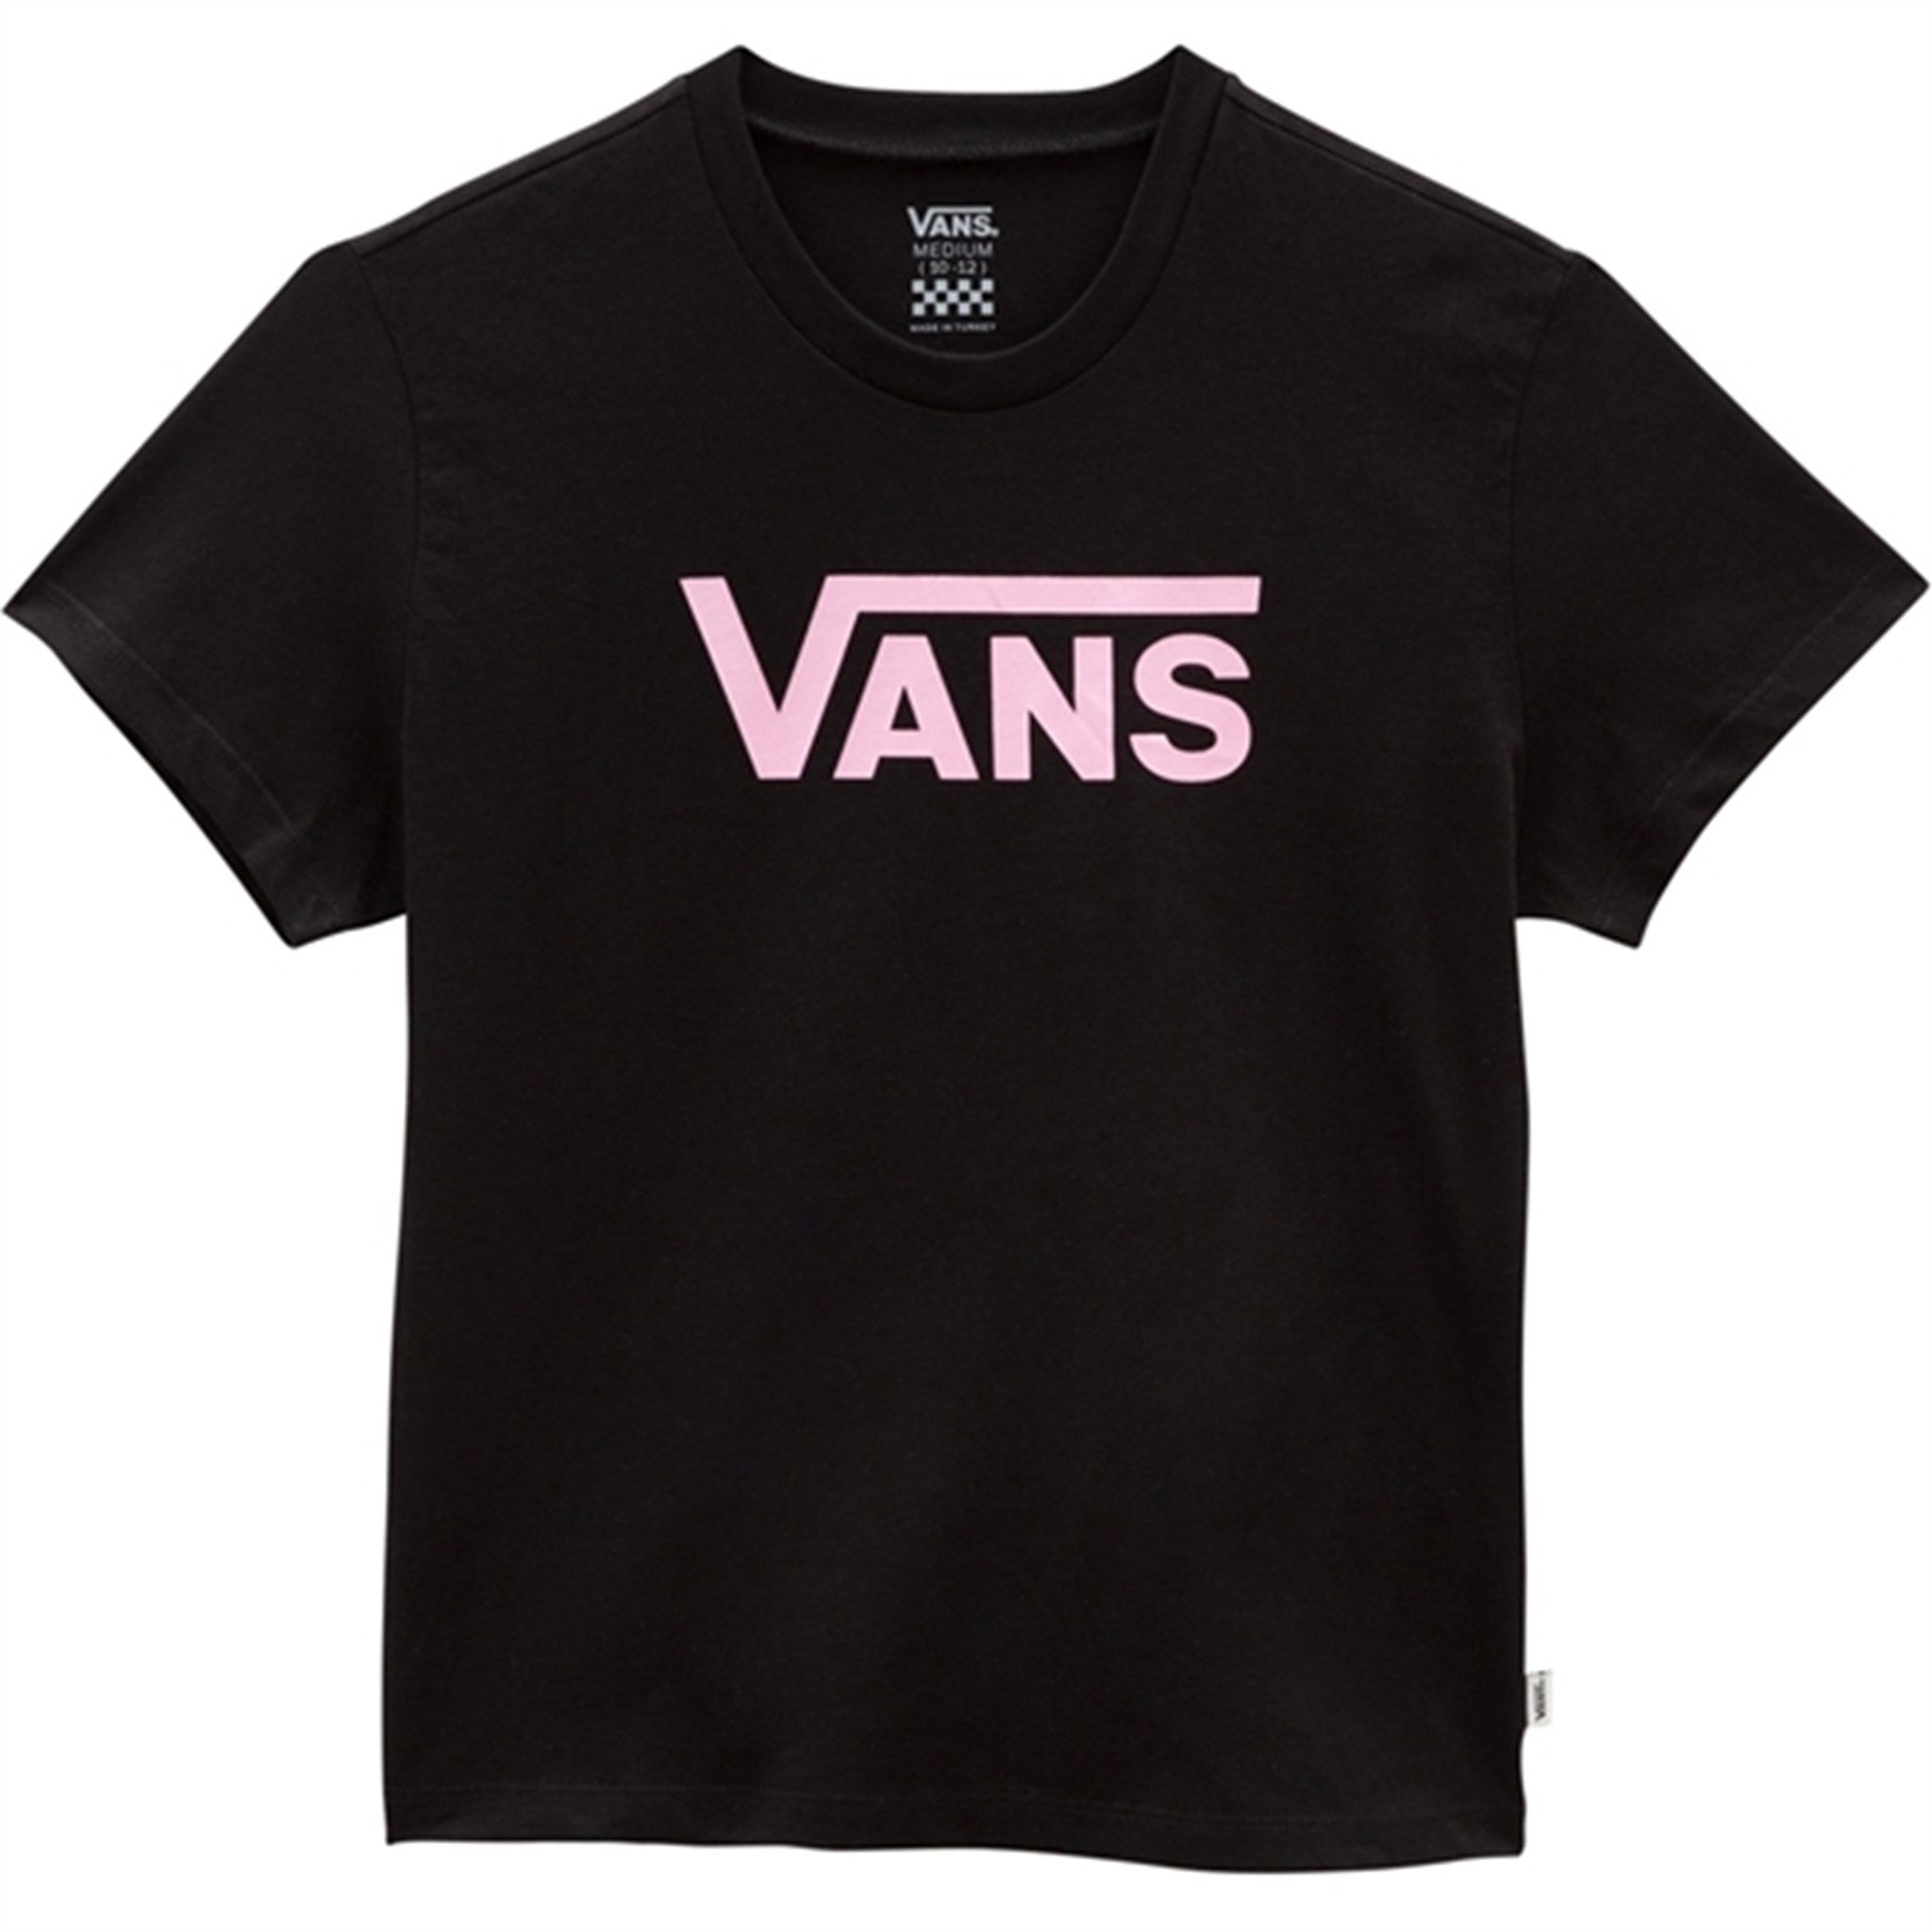 VANS Flying V Crew Girls T-shirt Black/Begonia Pink